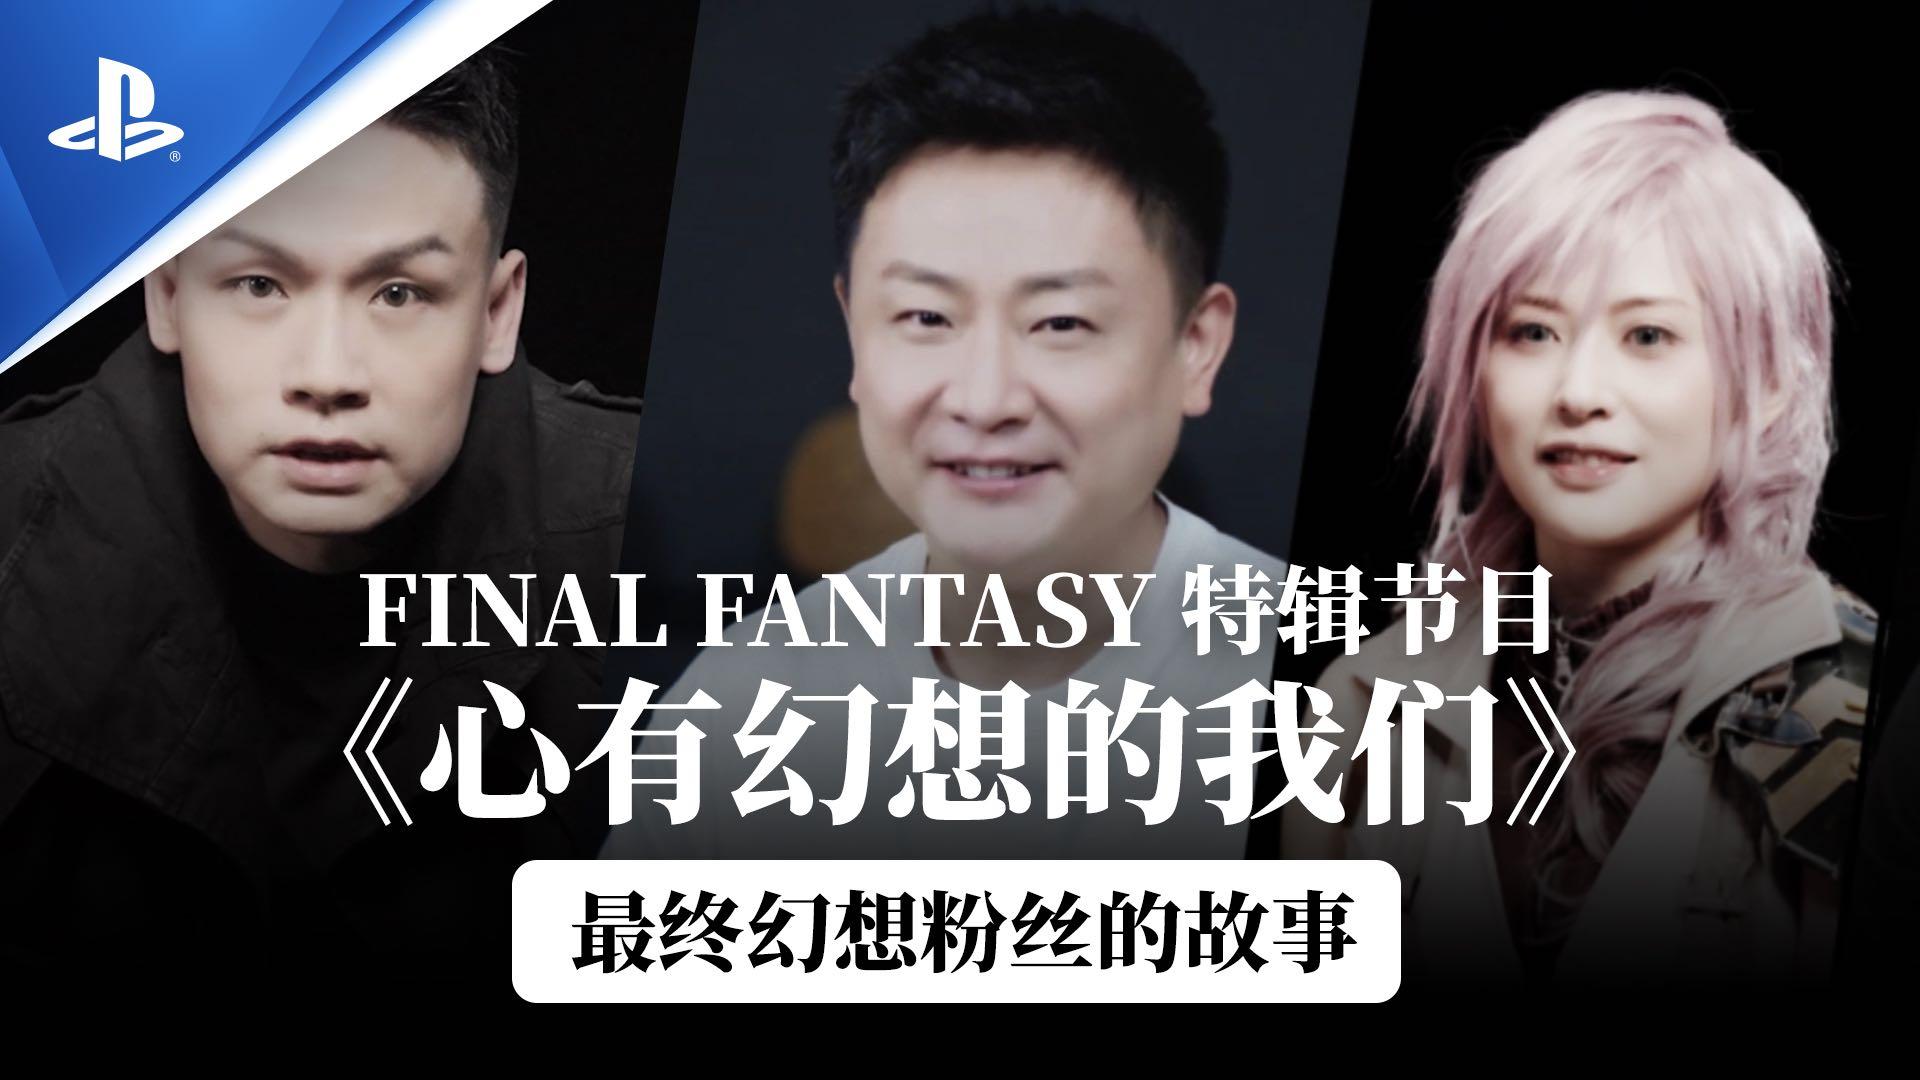 Final Fantasy Emotional Video 《心有幻想的我们》